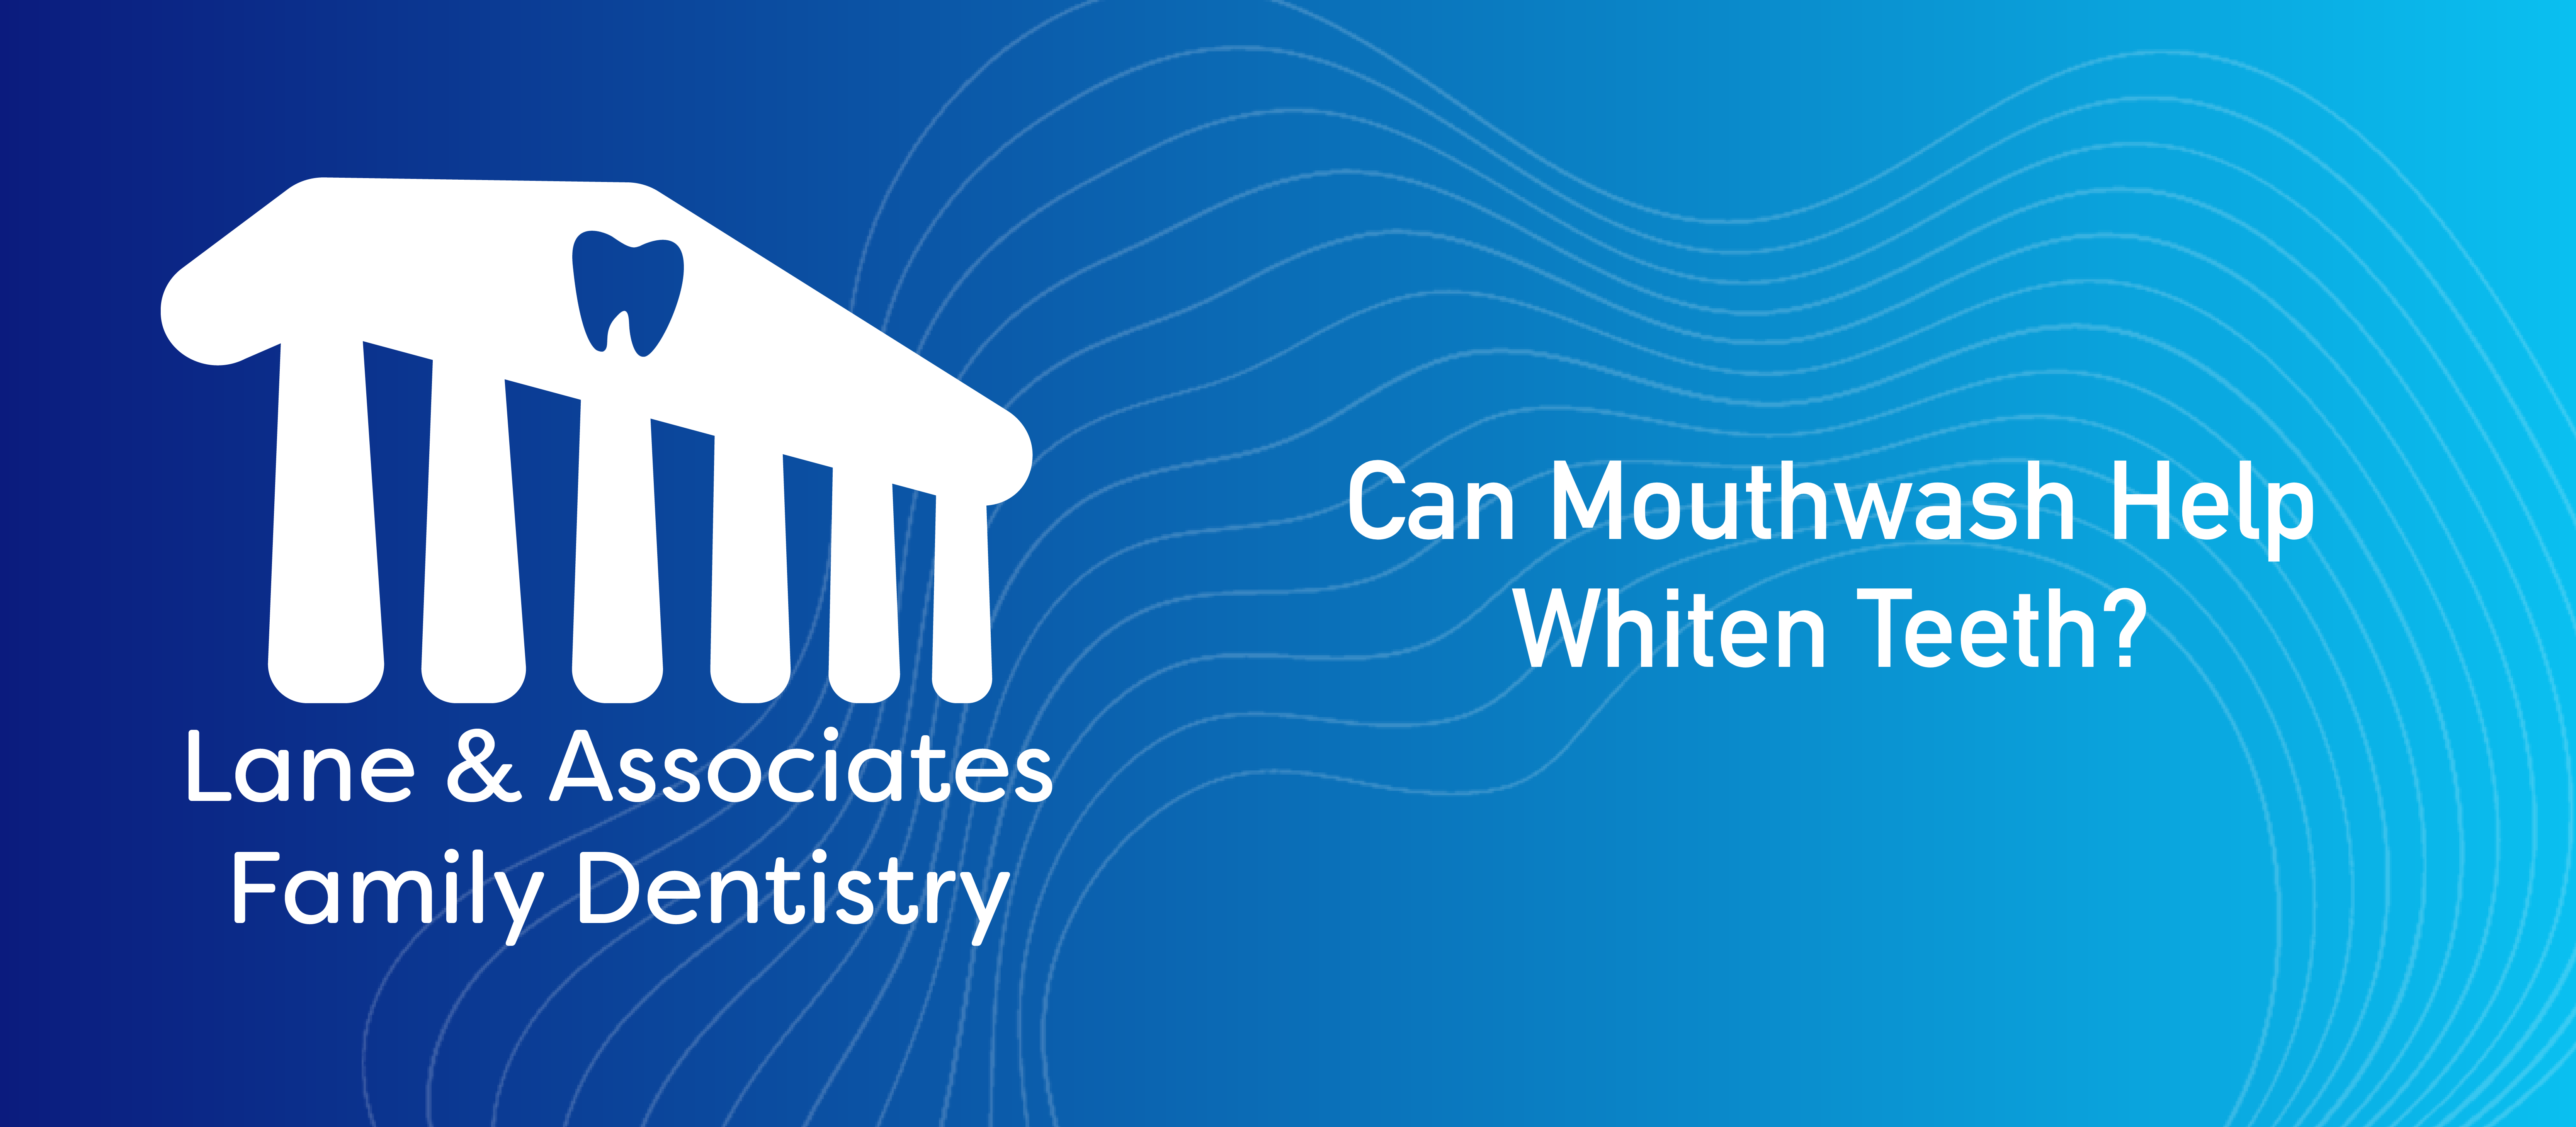 Can mouthwash help whiten teeth?